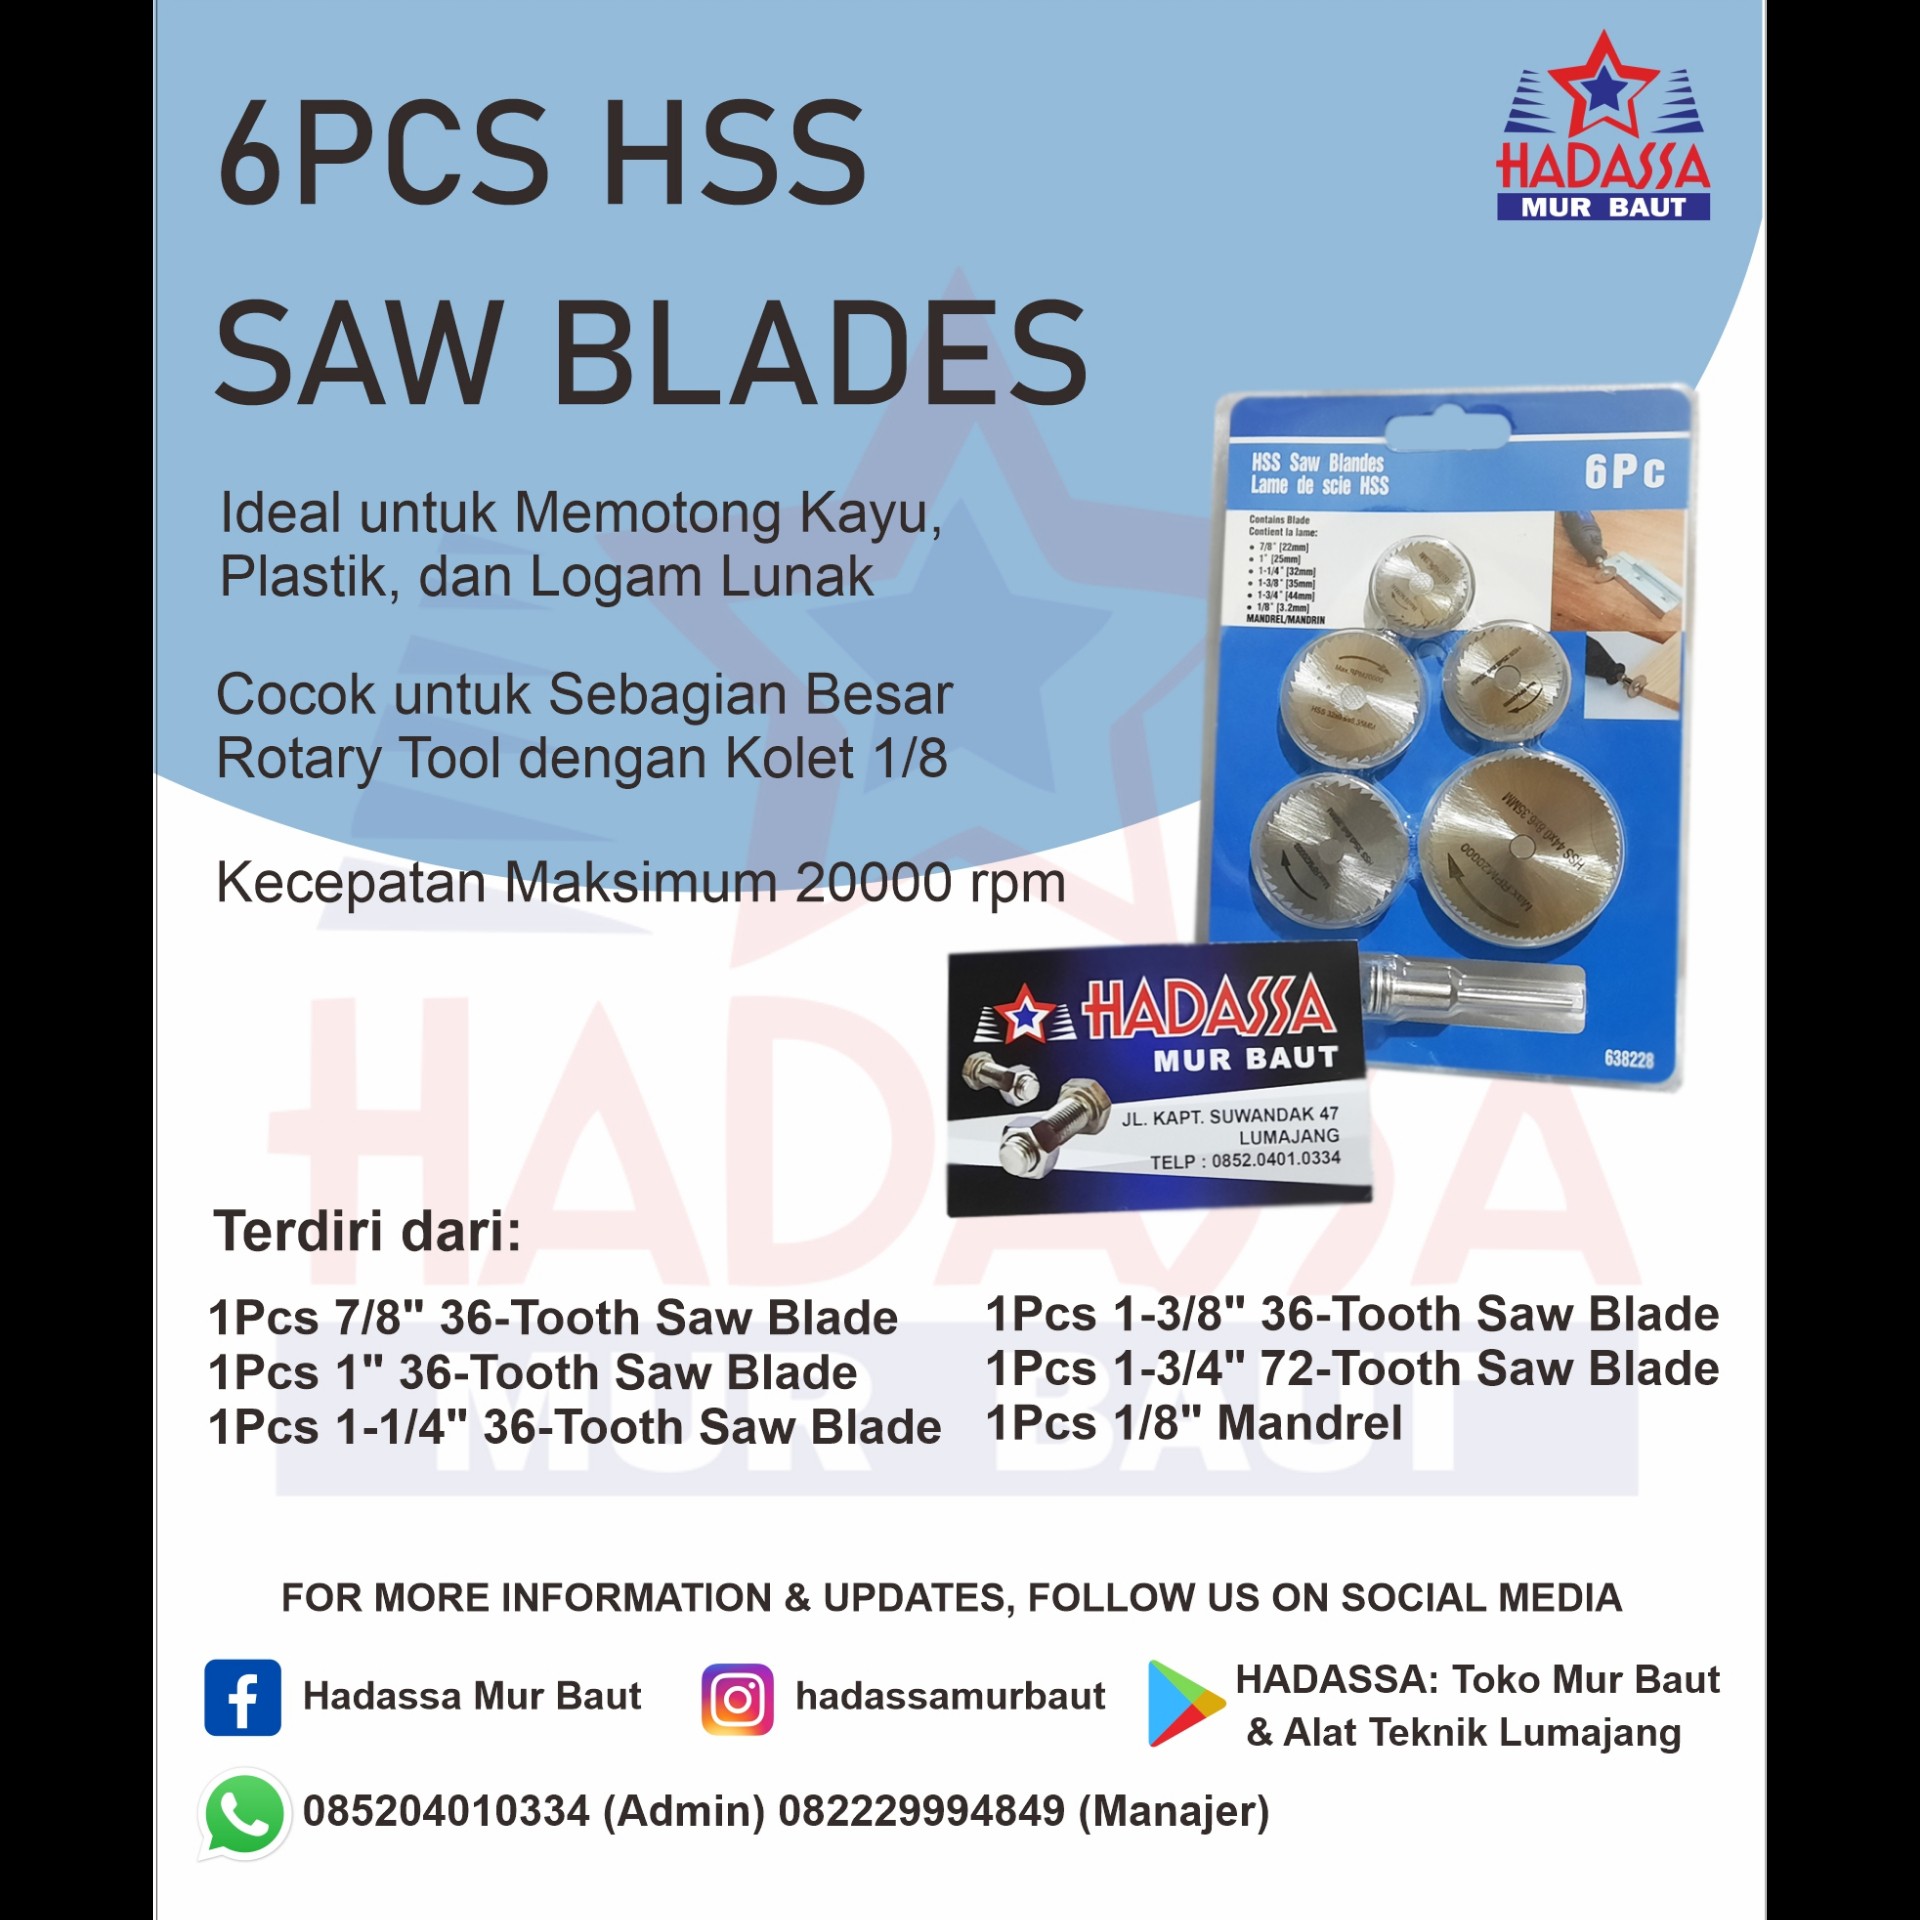 6Pcs HSS Saw Blades